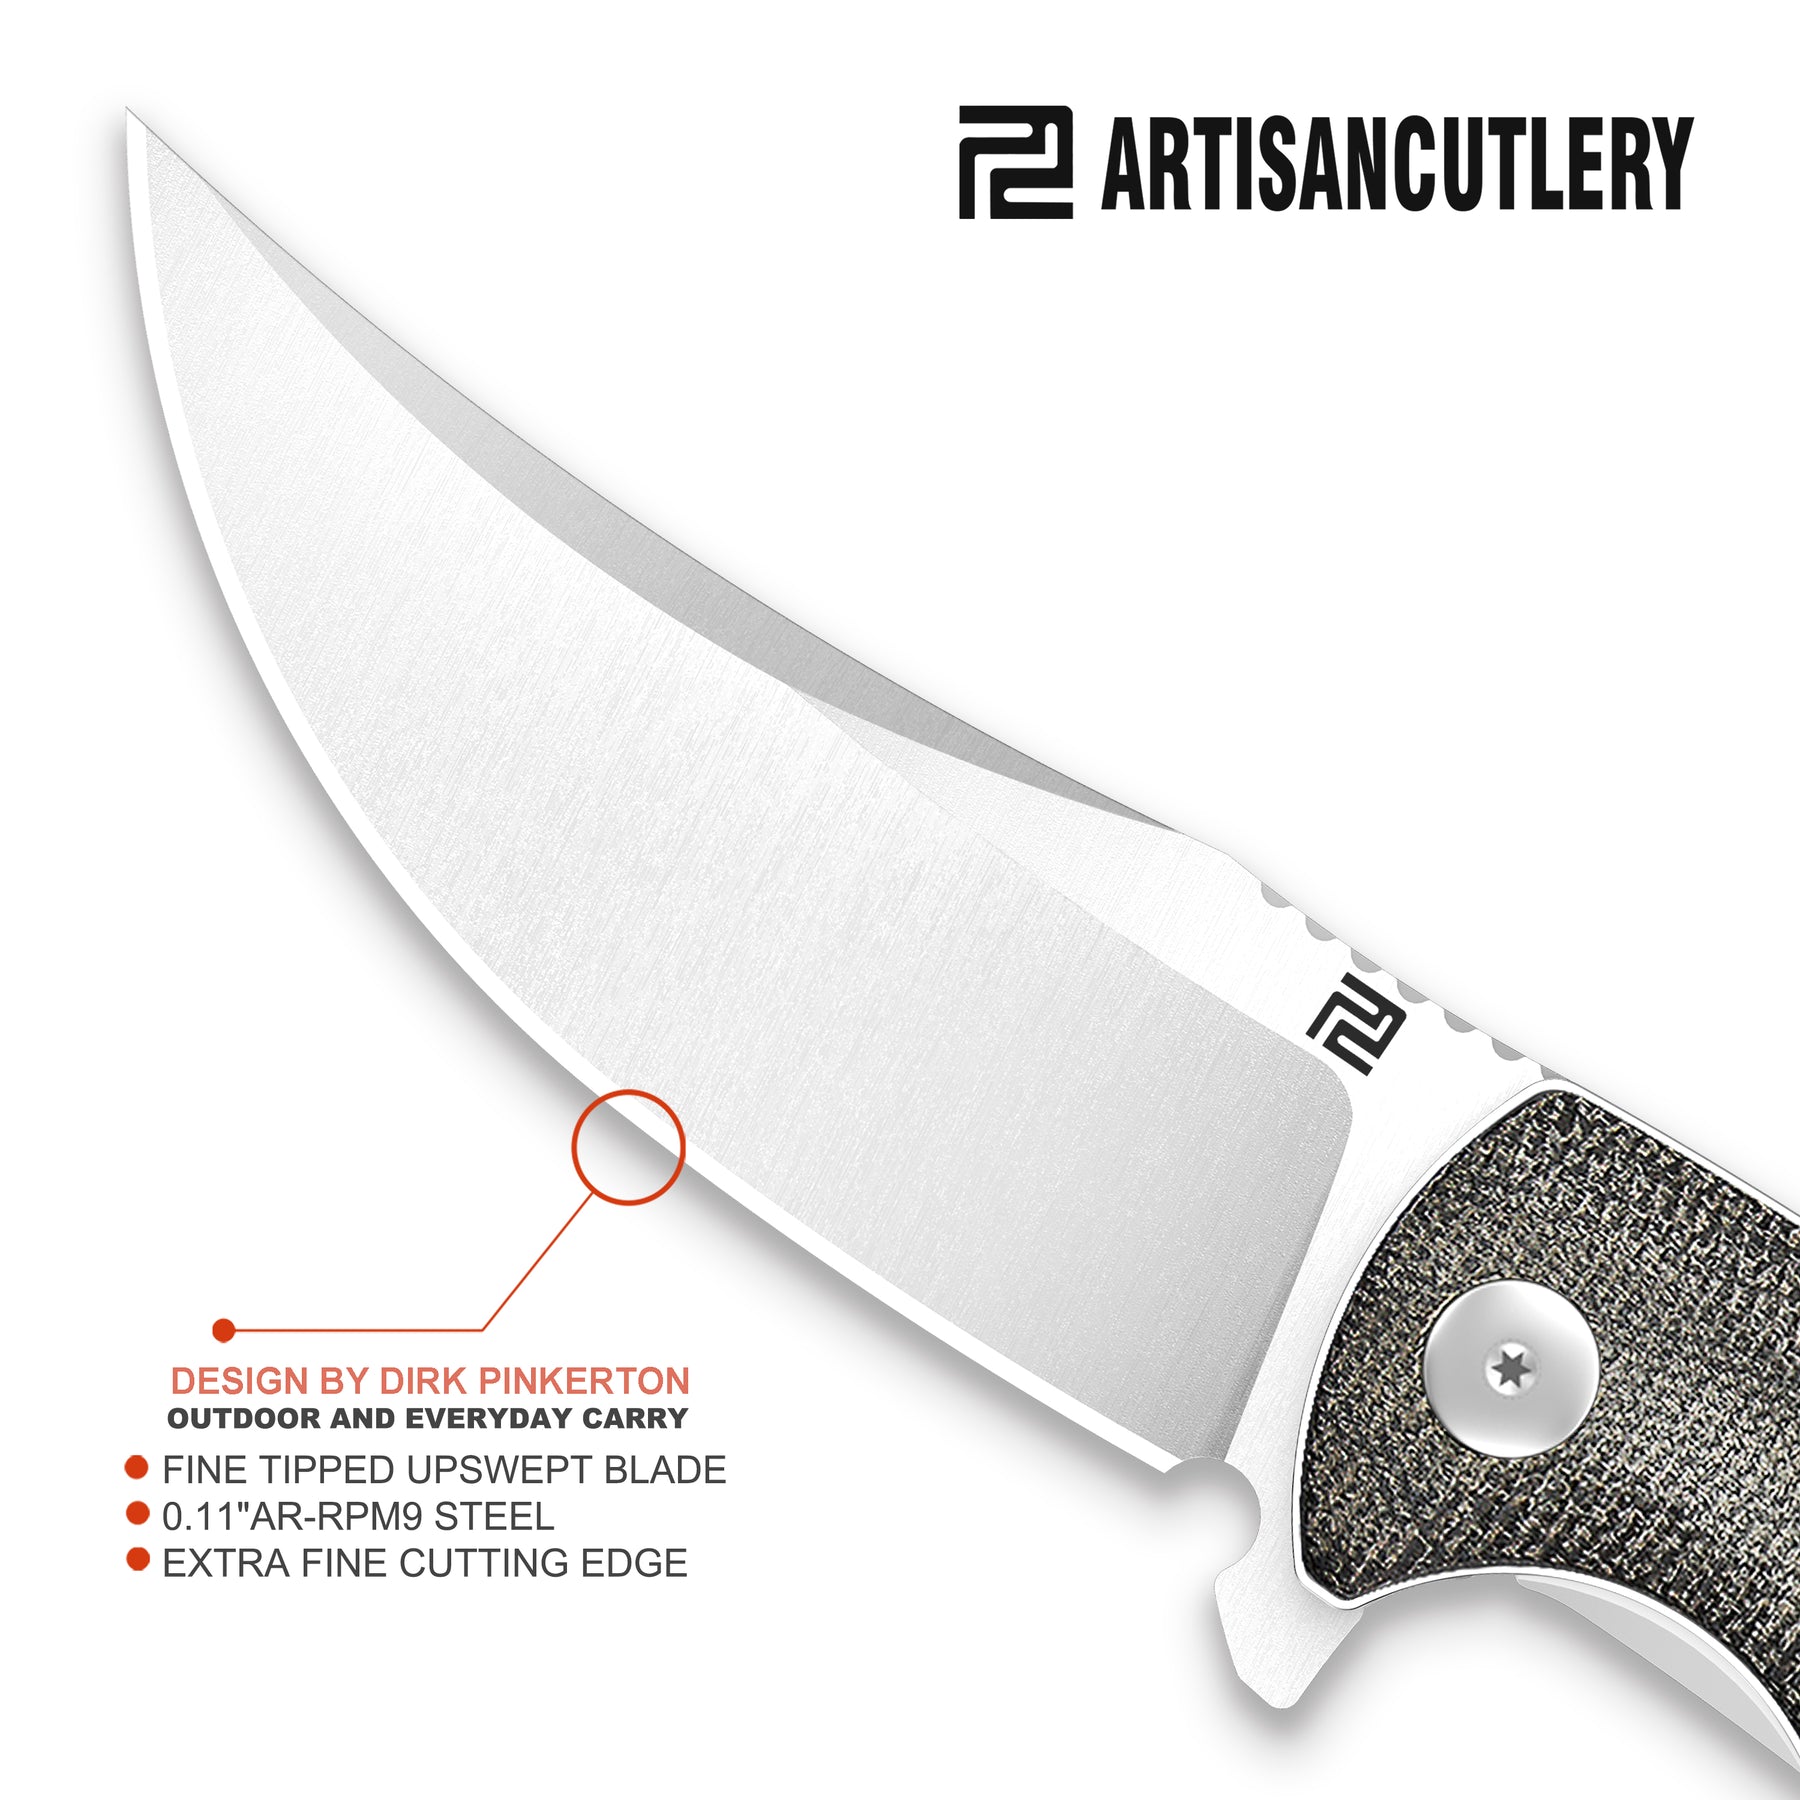 Artisan Cutlery Arroyo ATZ-1845P AR-RPM9 Powder Steel Blade Micarta Handle Folding Knives